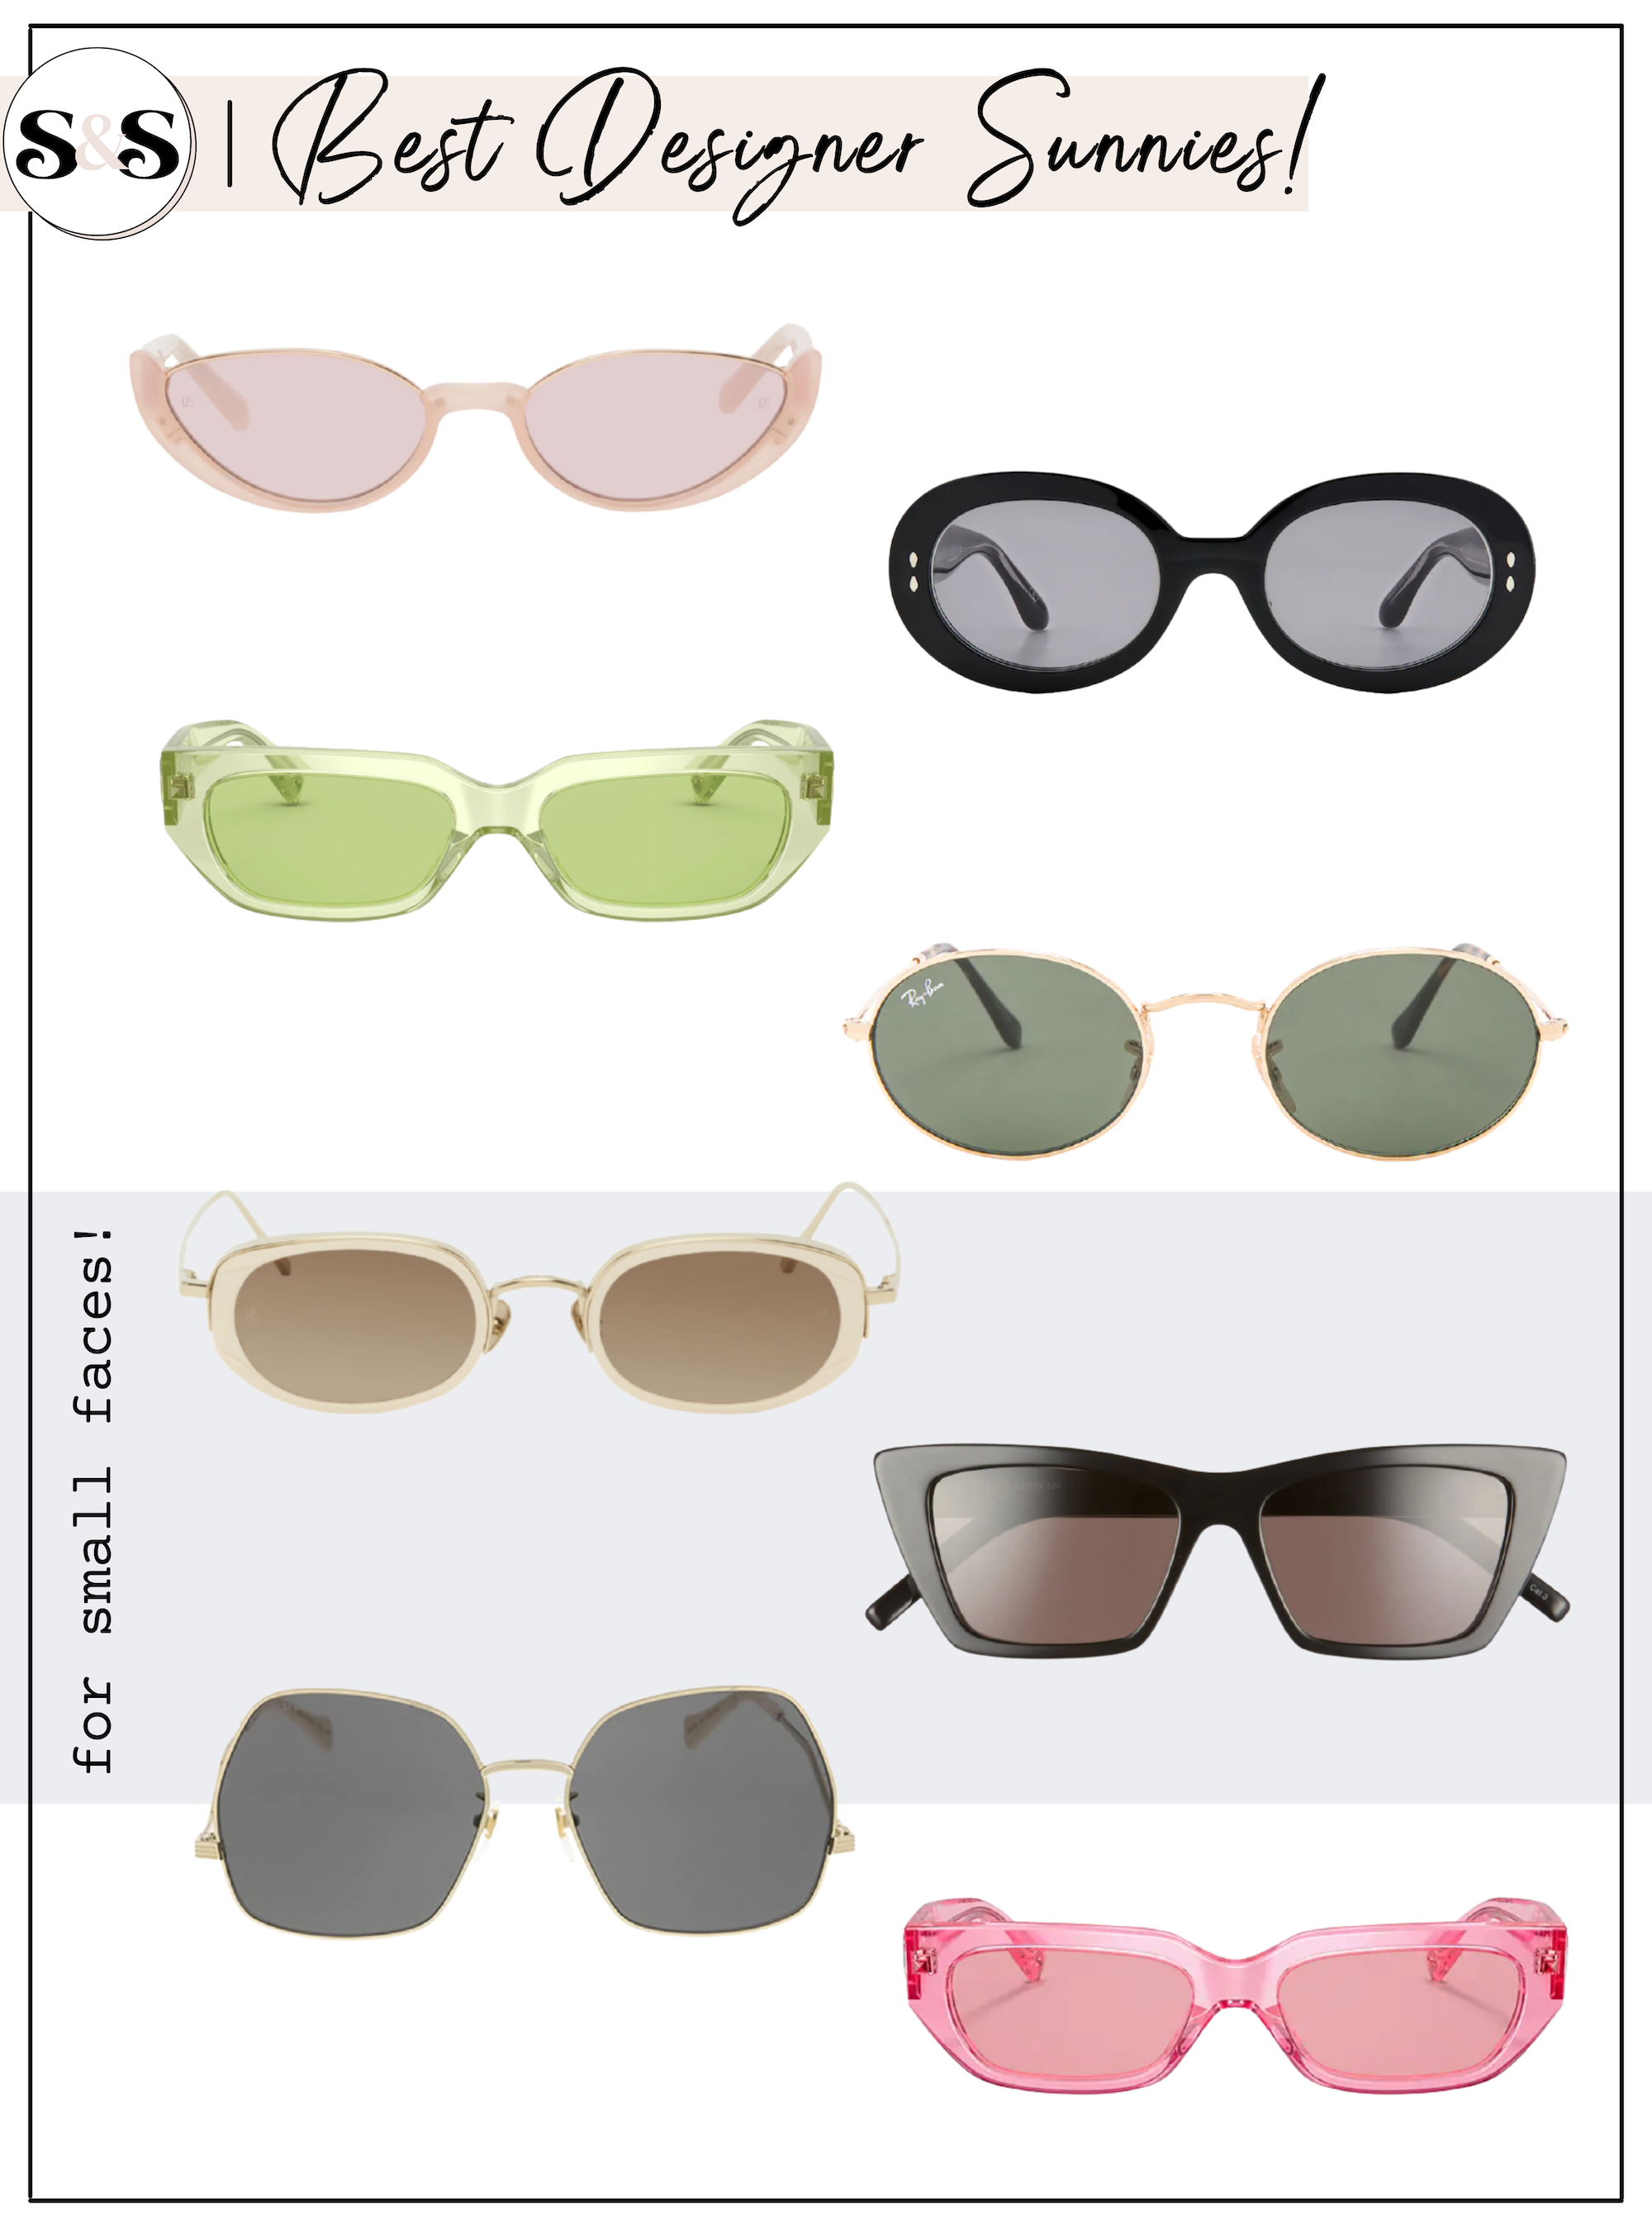 9 Best Designer Sunglasses For Small Faces! (Ultra Flattering!)